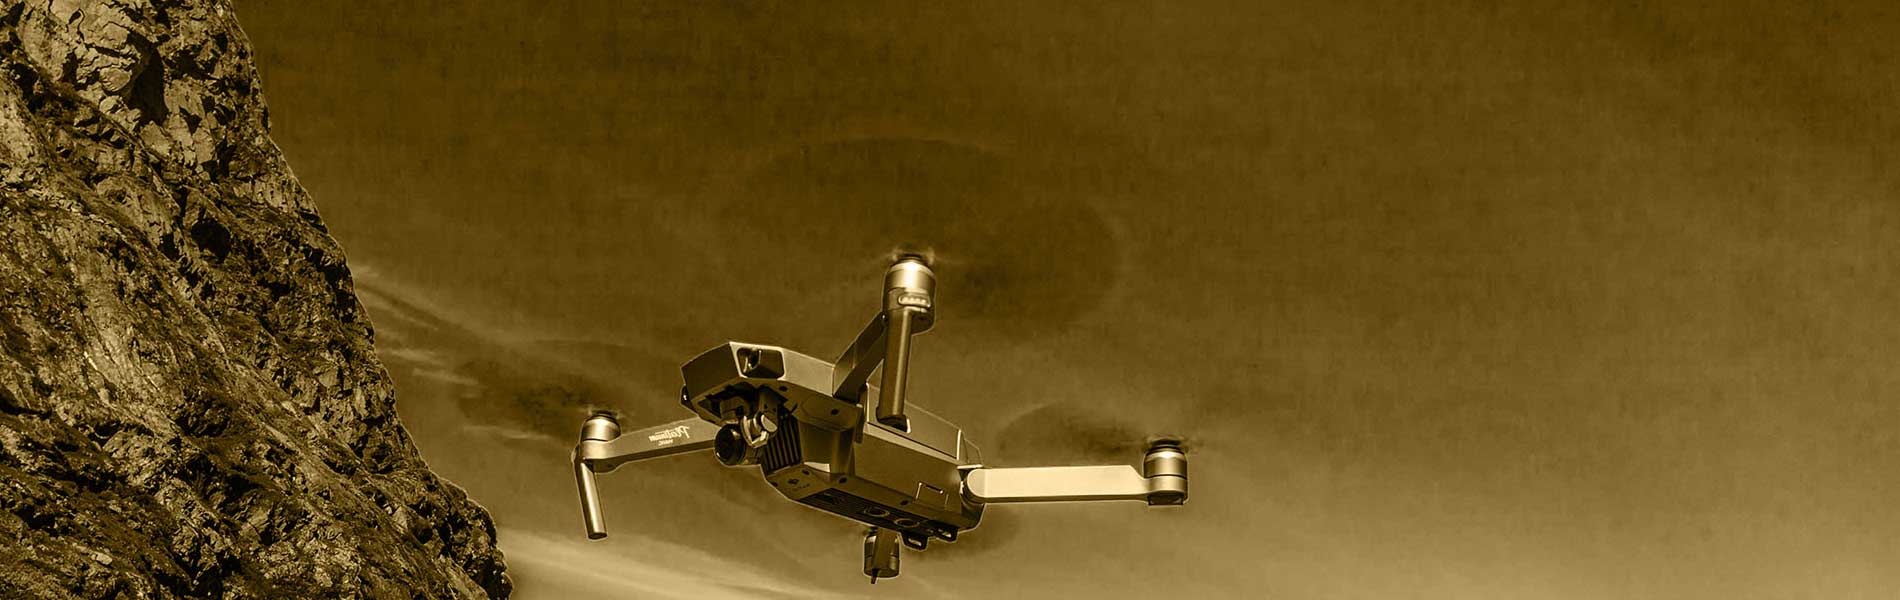 Pilote drone freelance Saint-Martin-De-Crau (13310)